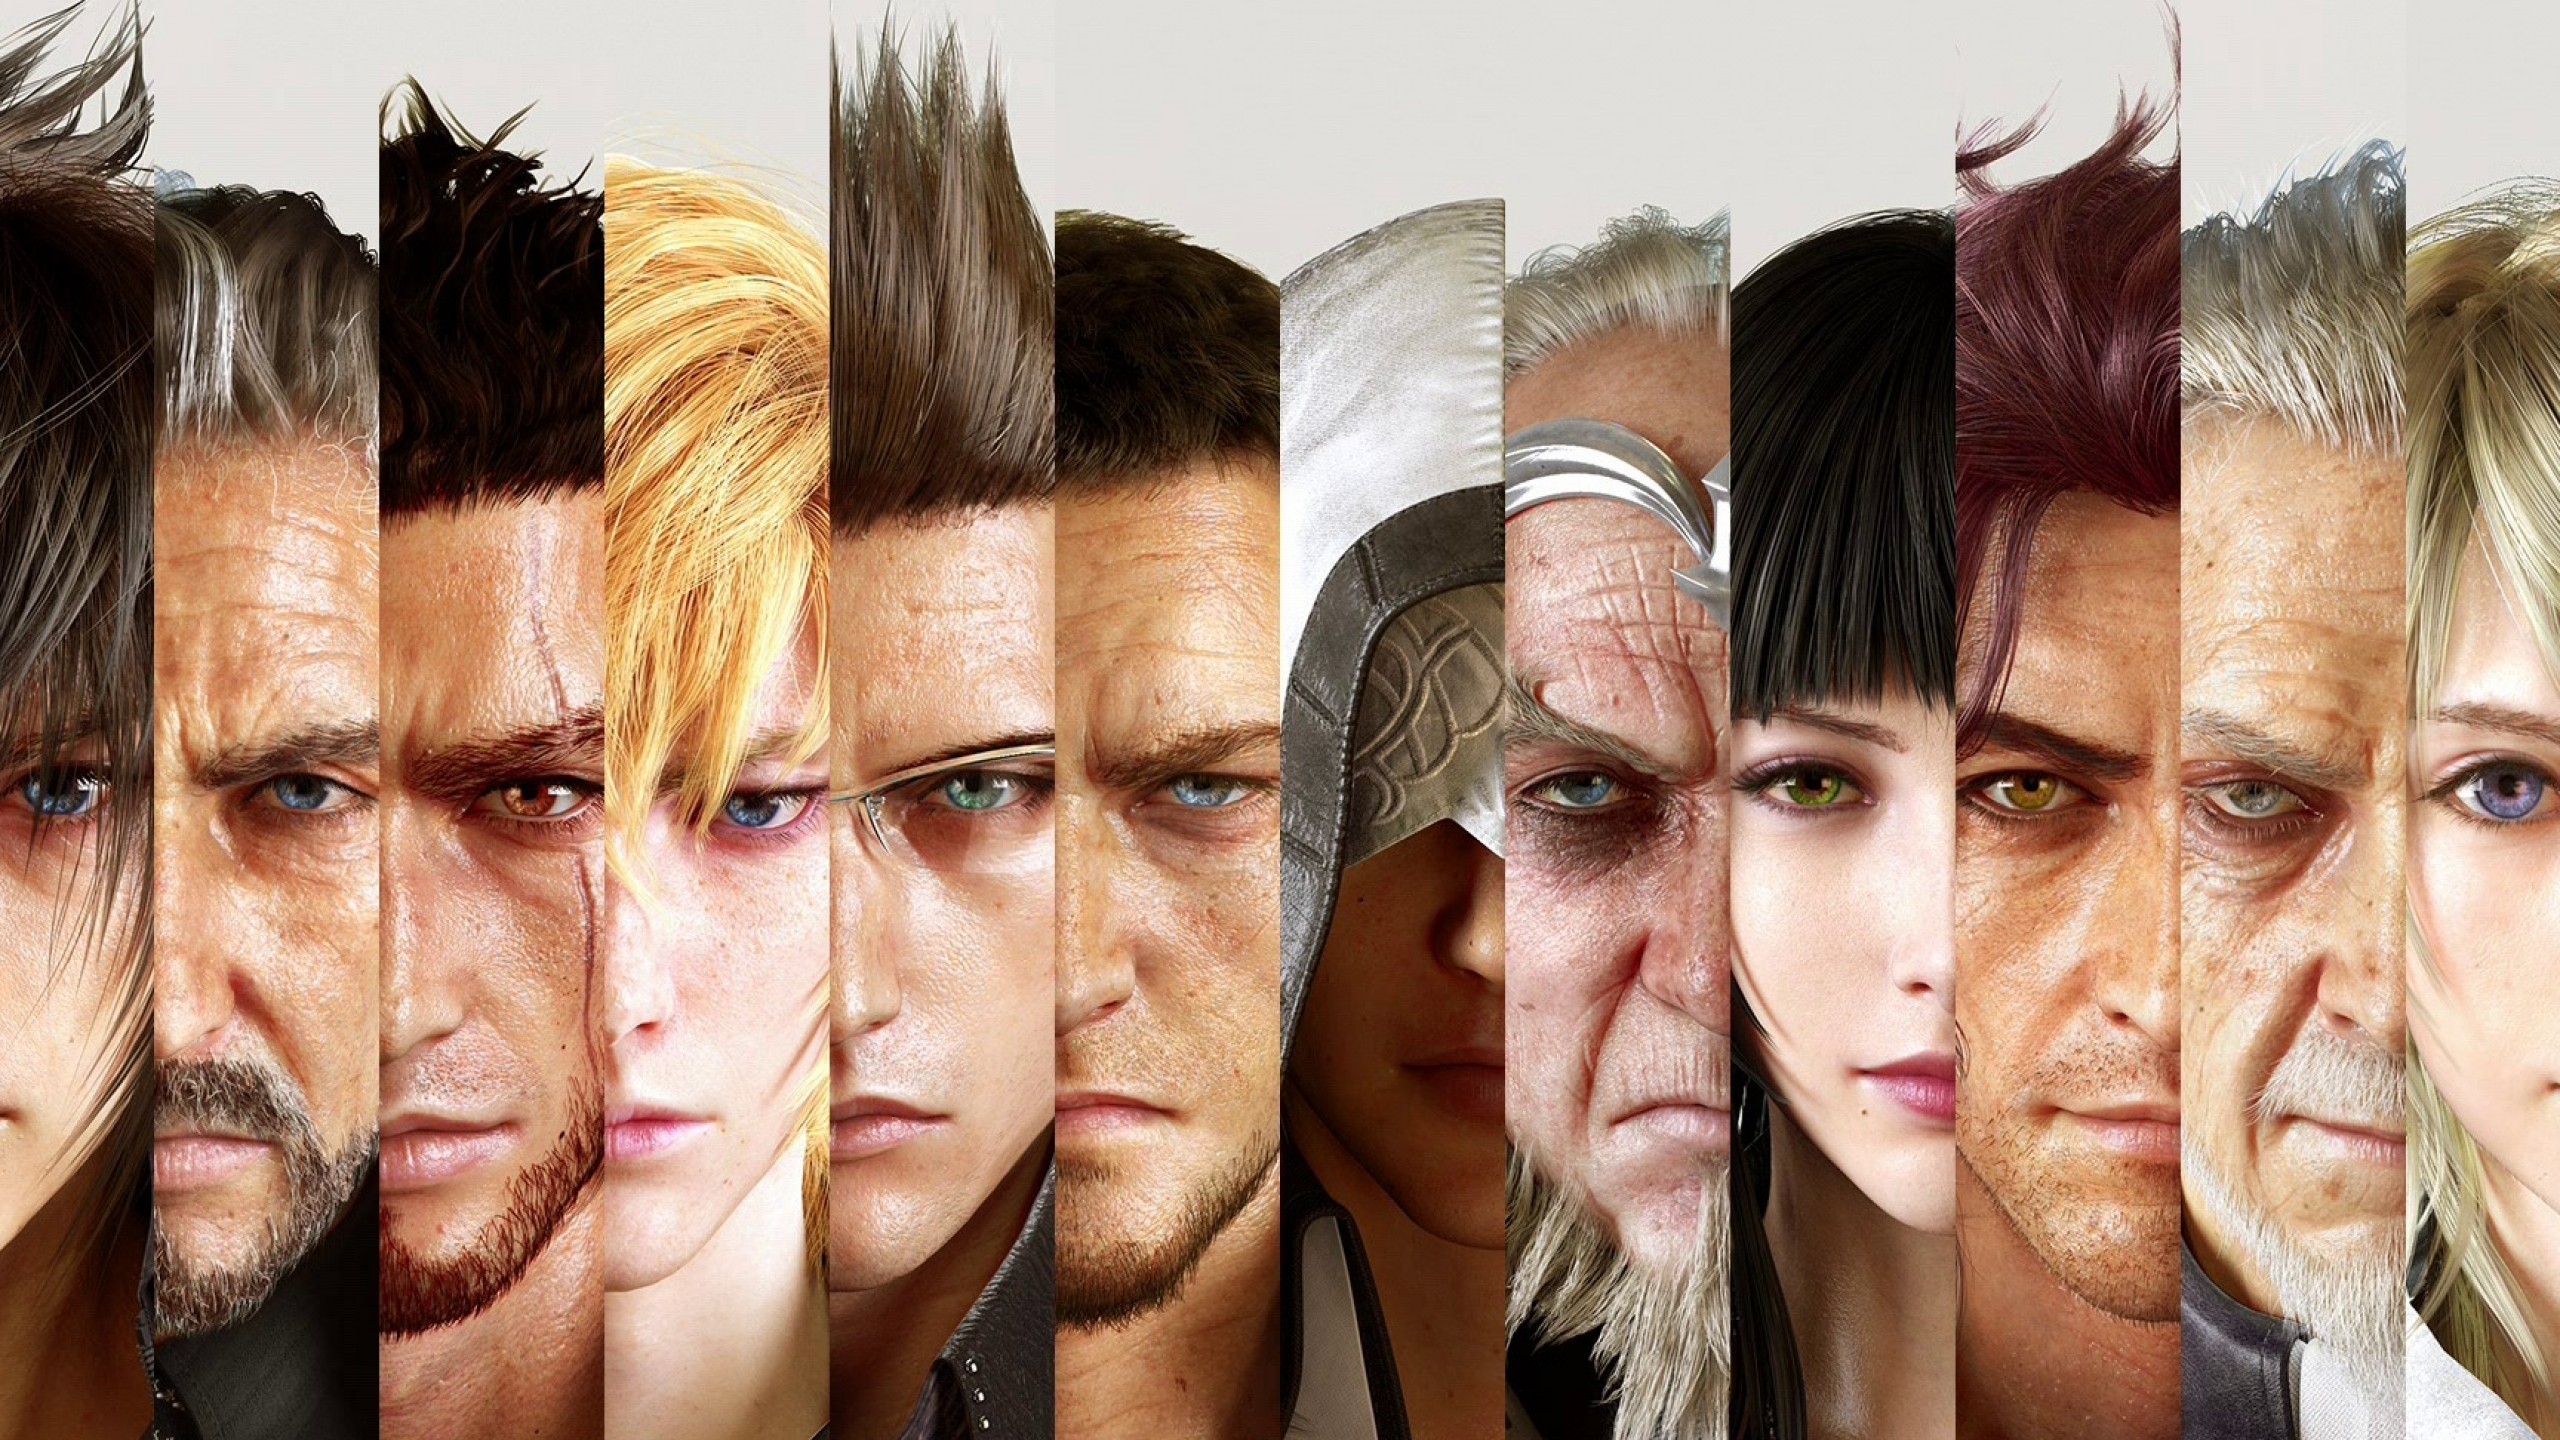 Final Fantasy XV Cast for 2560x1440 HDTV resolution